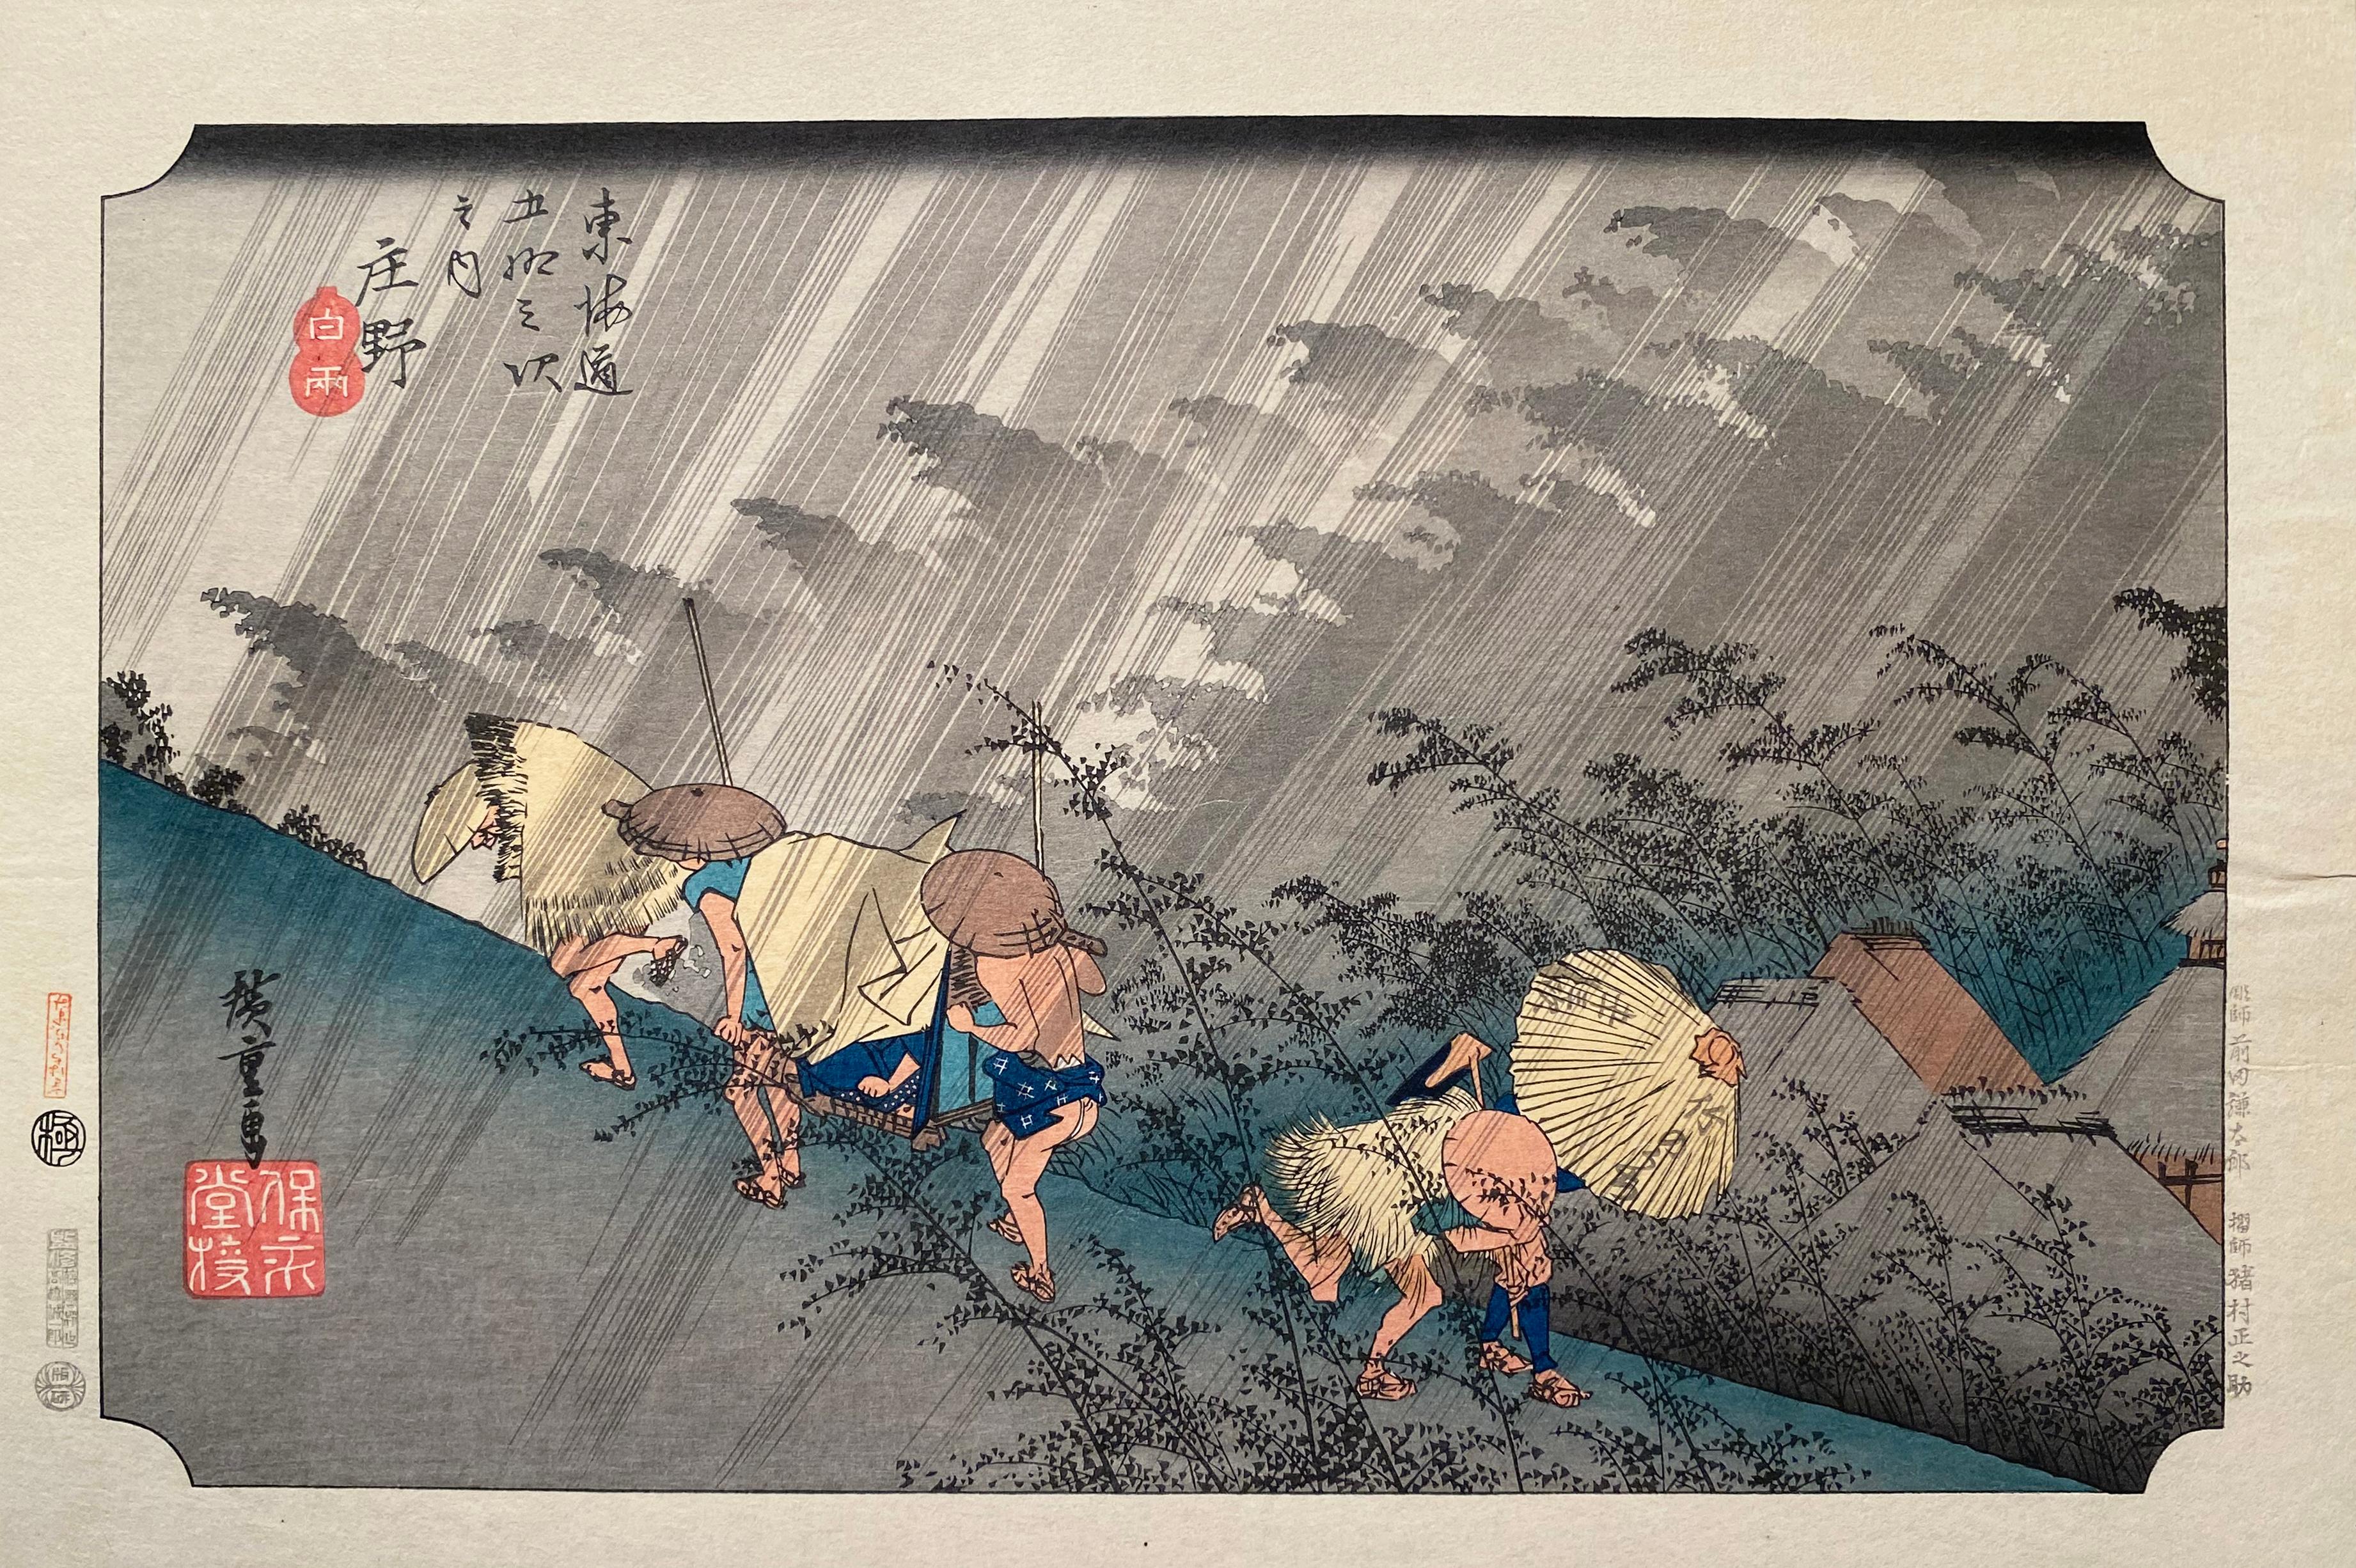 Utagawa Hiroshige (Ando Hiroshige) Landscape Print – Shono Rain", Nach Utagawa Hiroshige 歌川廣重, Ukiyo-e Holzschnitt, Tokaido